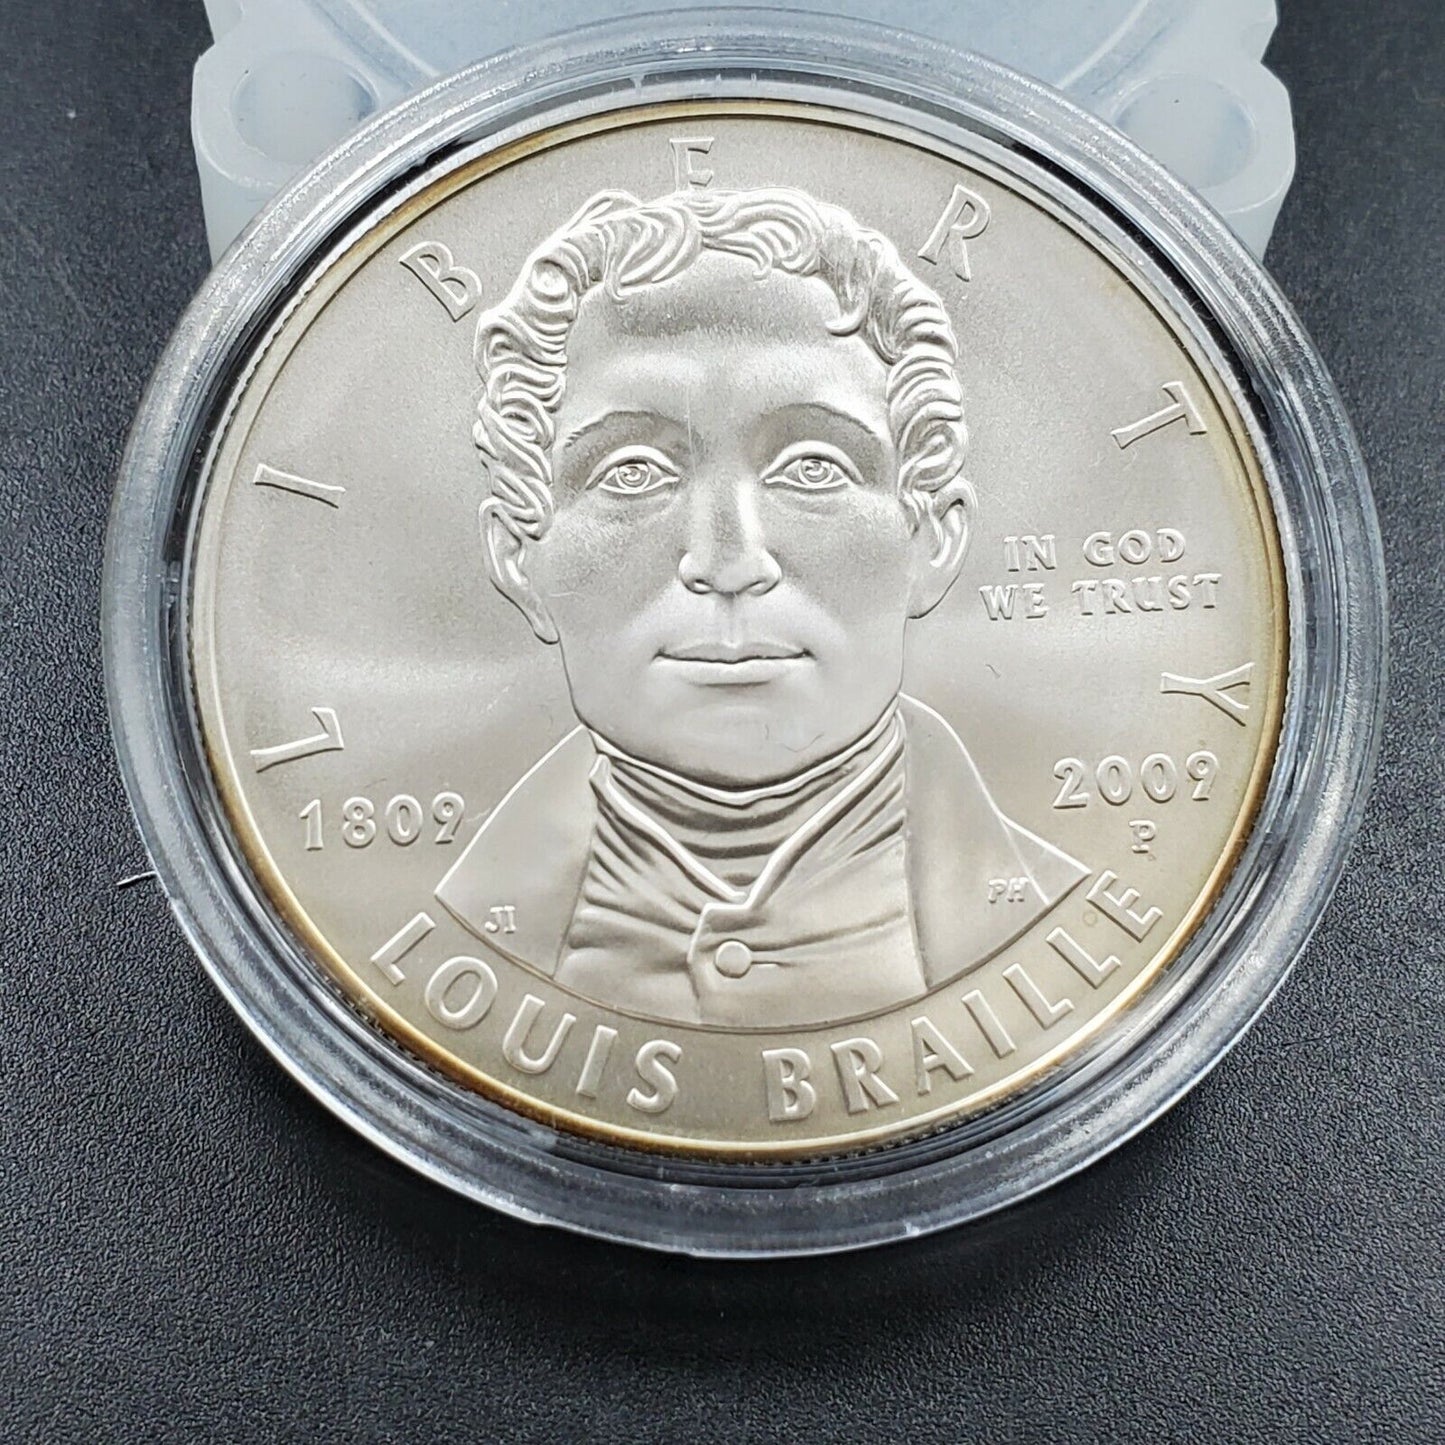 2009 P Louis Braille BU Silver Dollar Coin GEM BU UNC In Capsule Business Strik